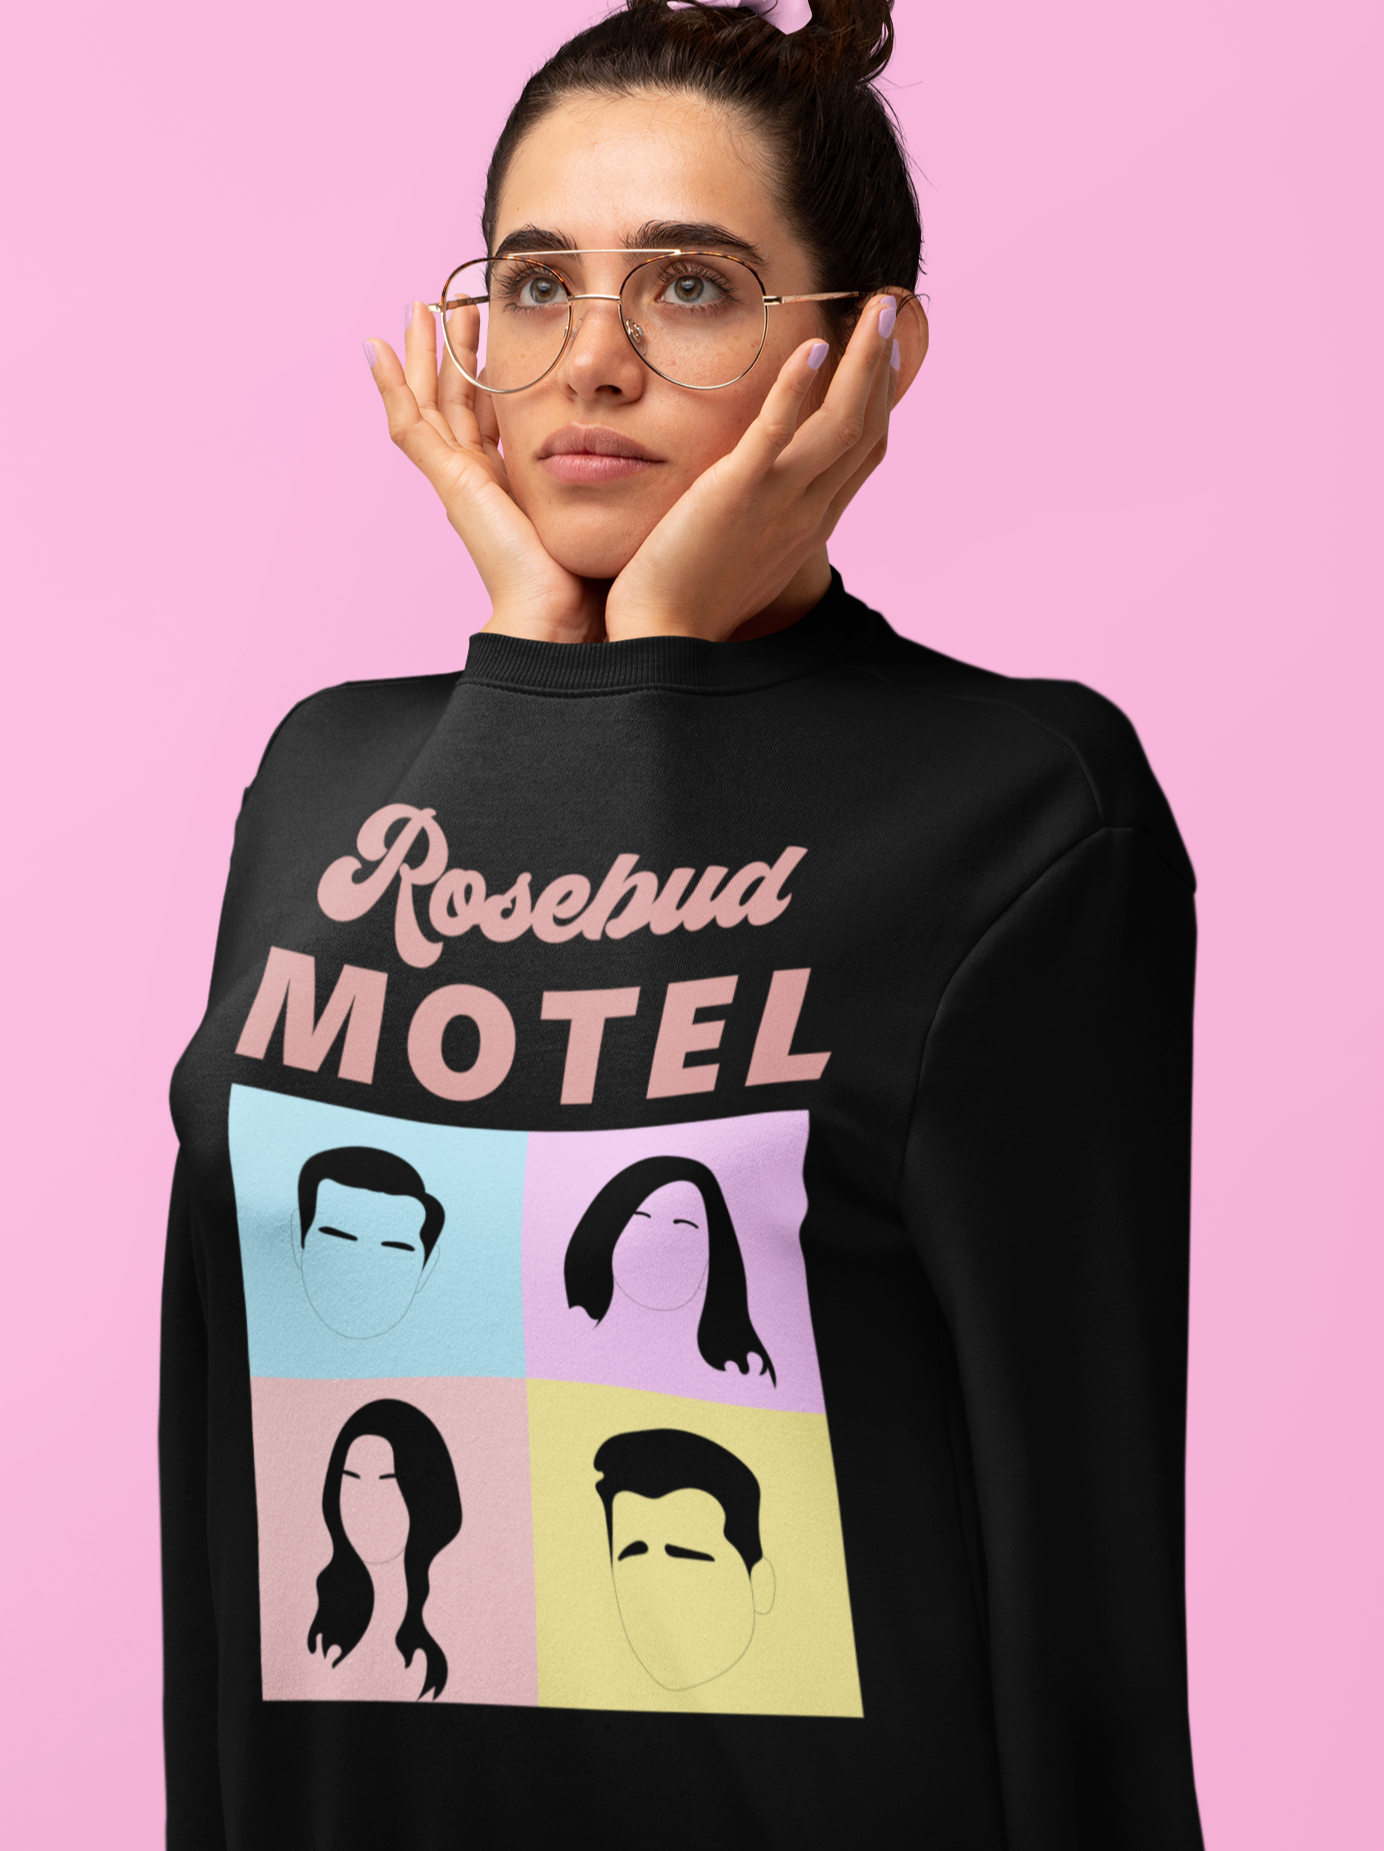 Black sweatshirt saying rosebud motel with schitt's creek characters